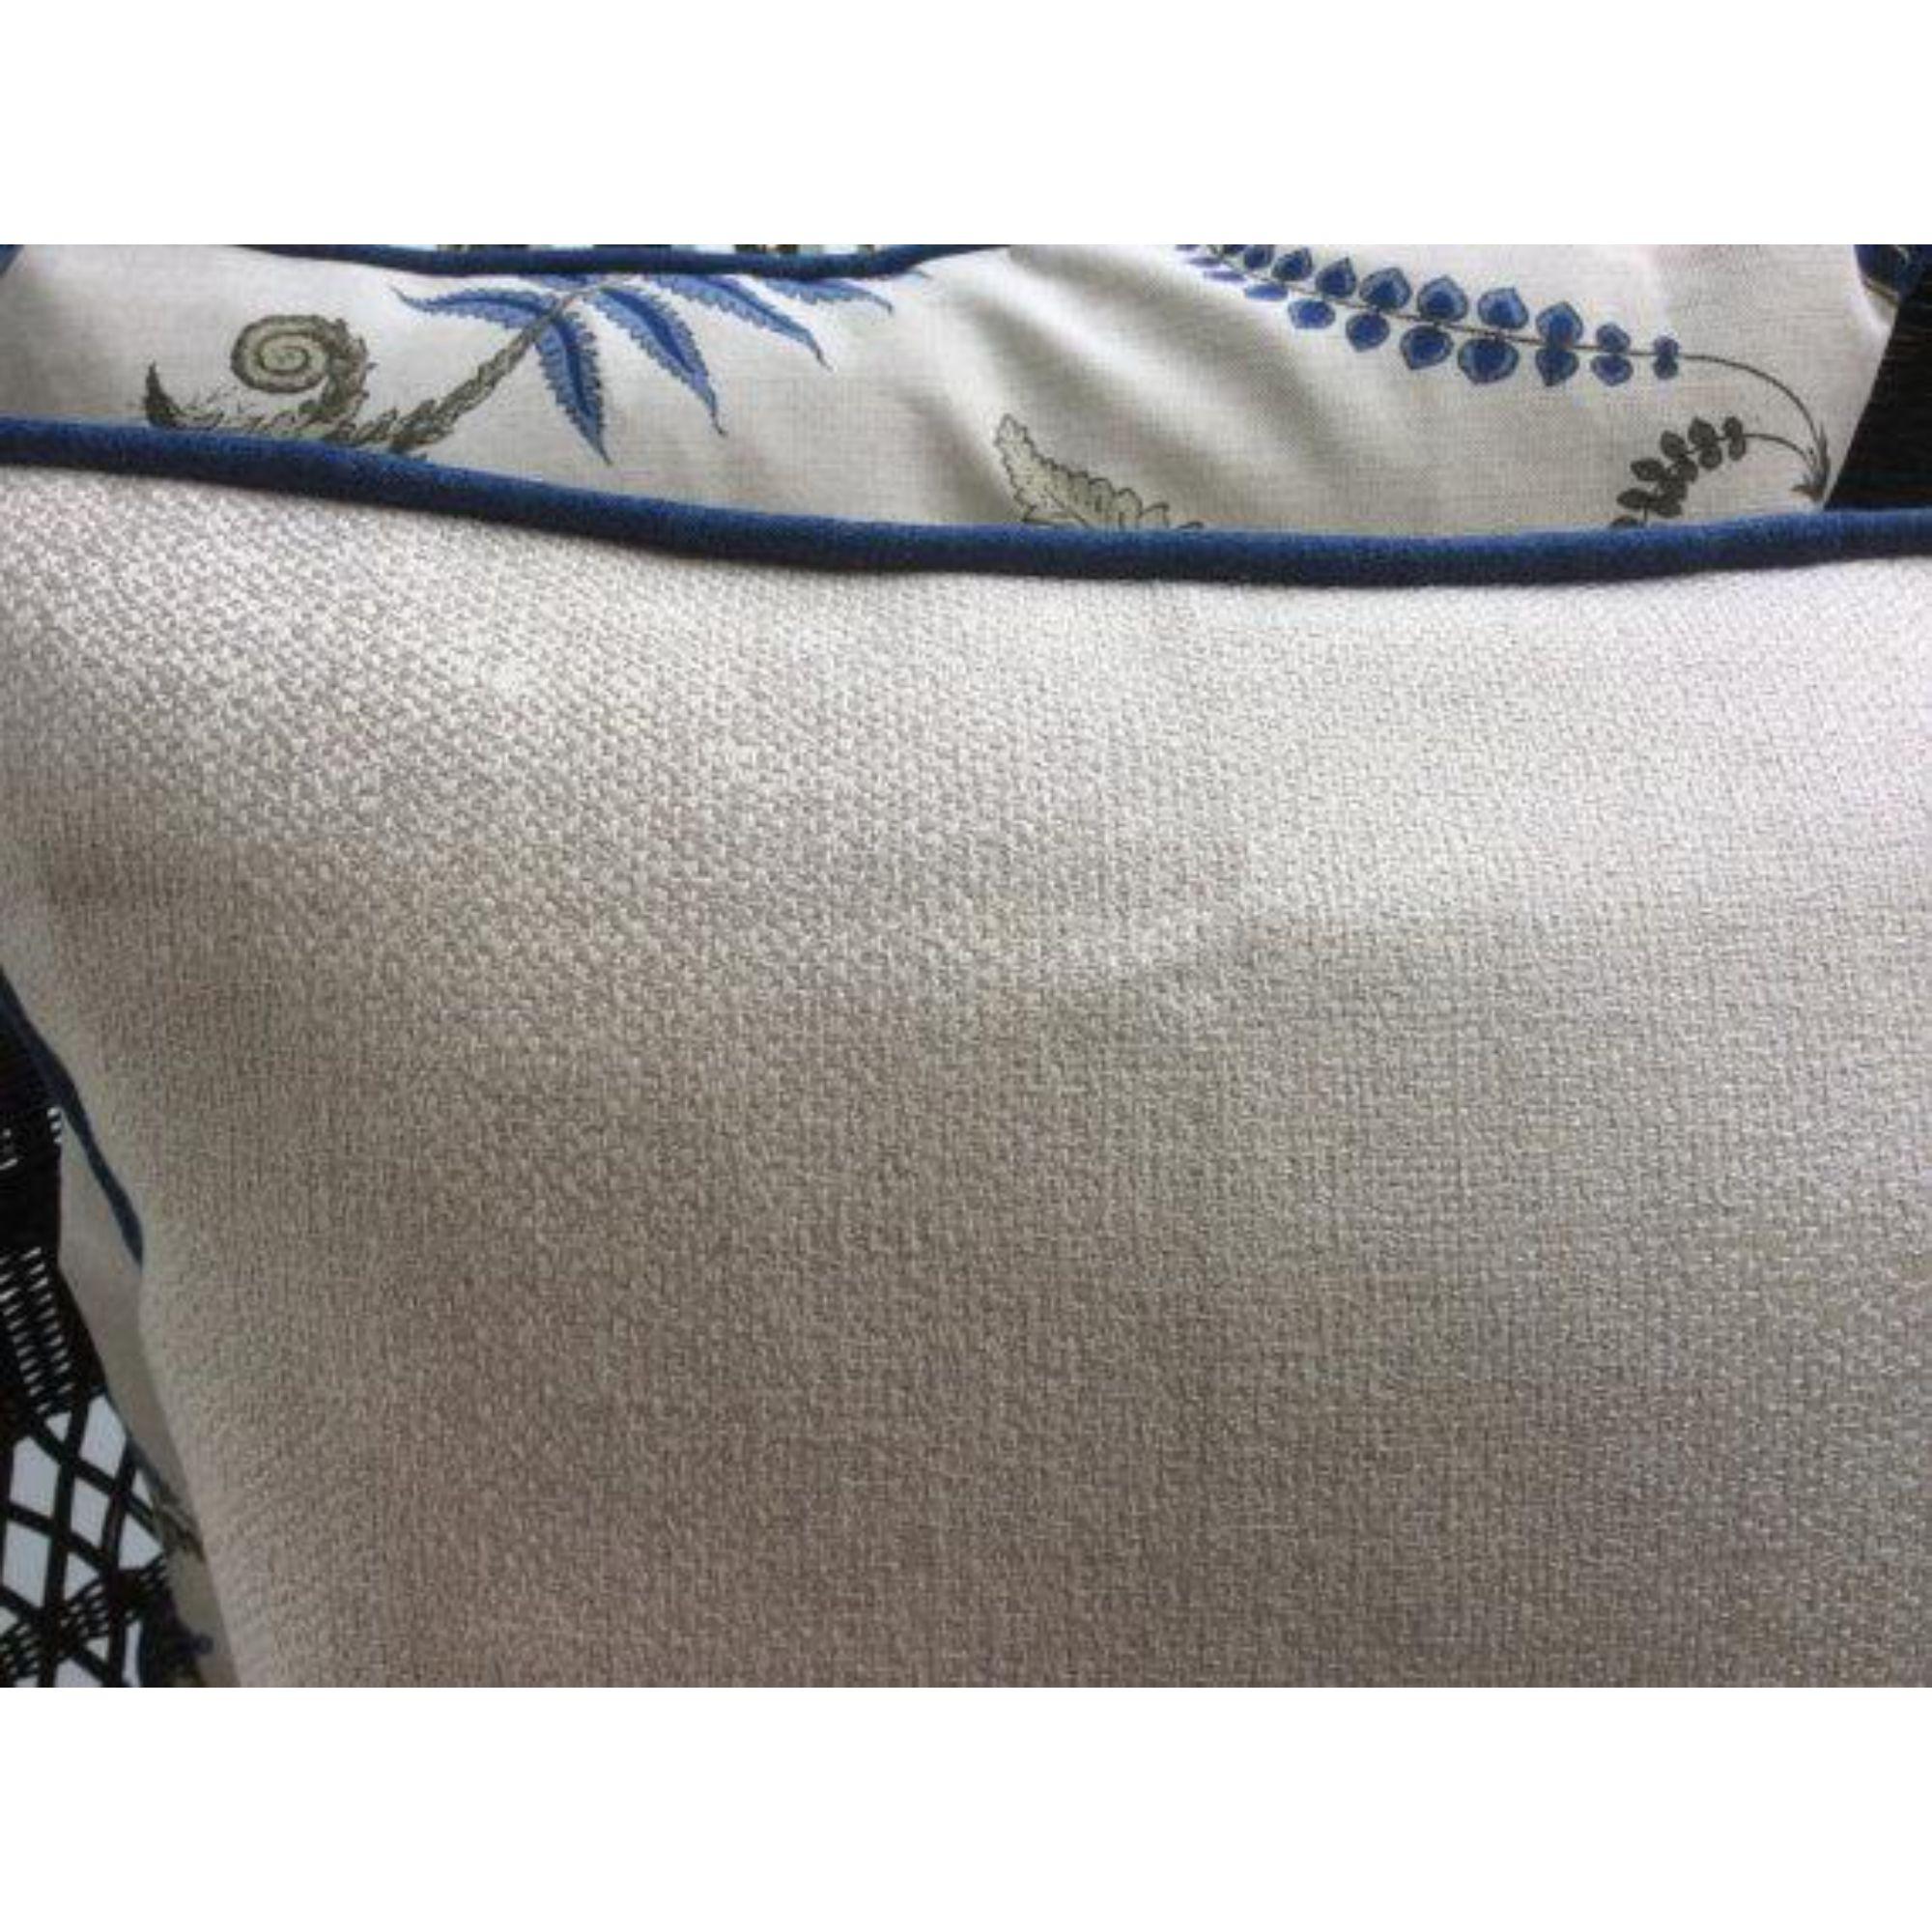 GP & J Baker Pillows in Indigo Blue & Linen 